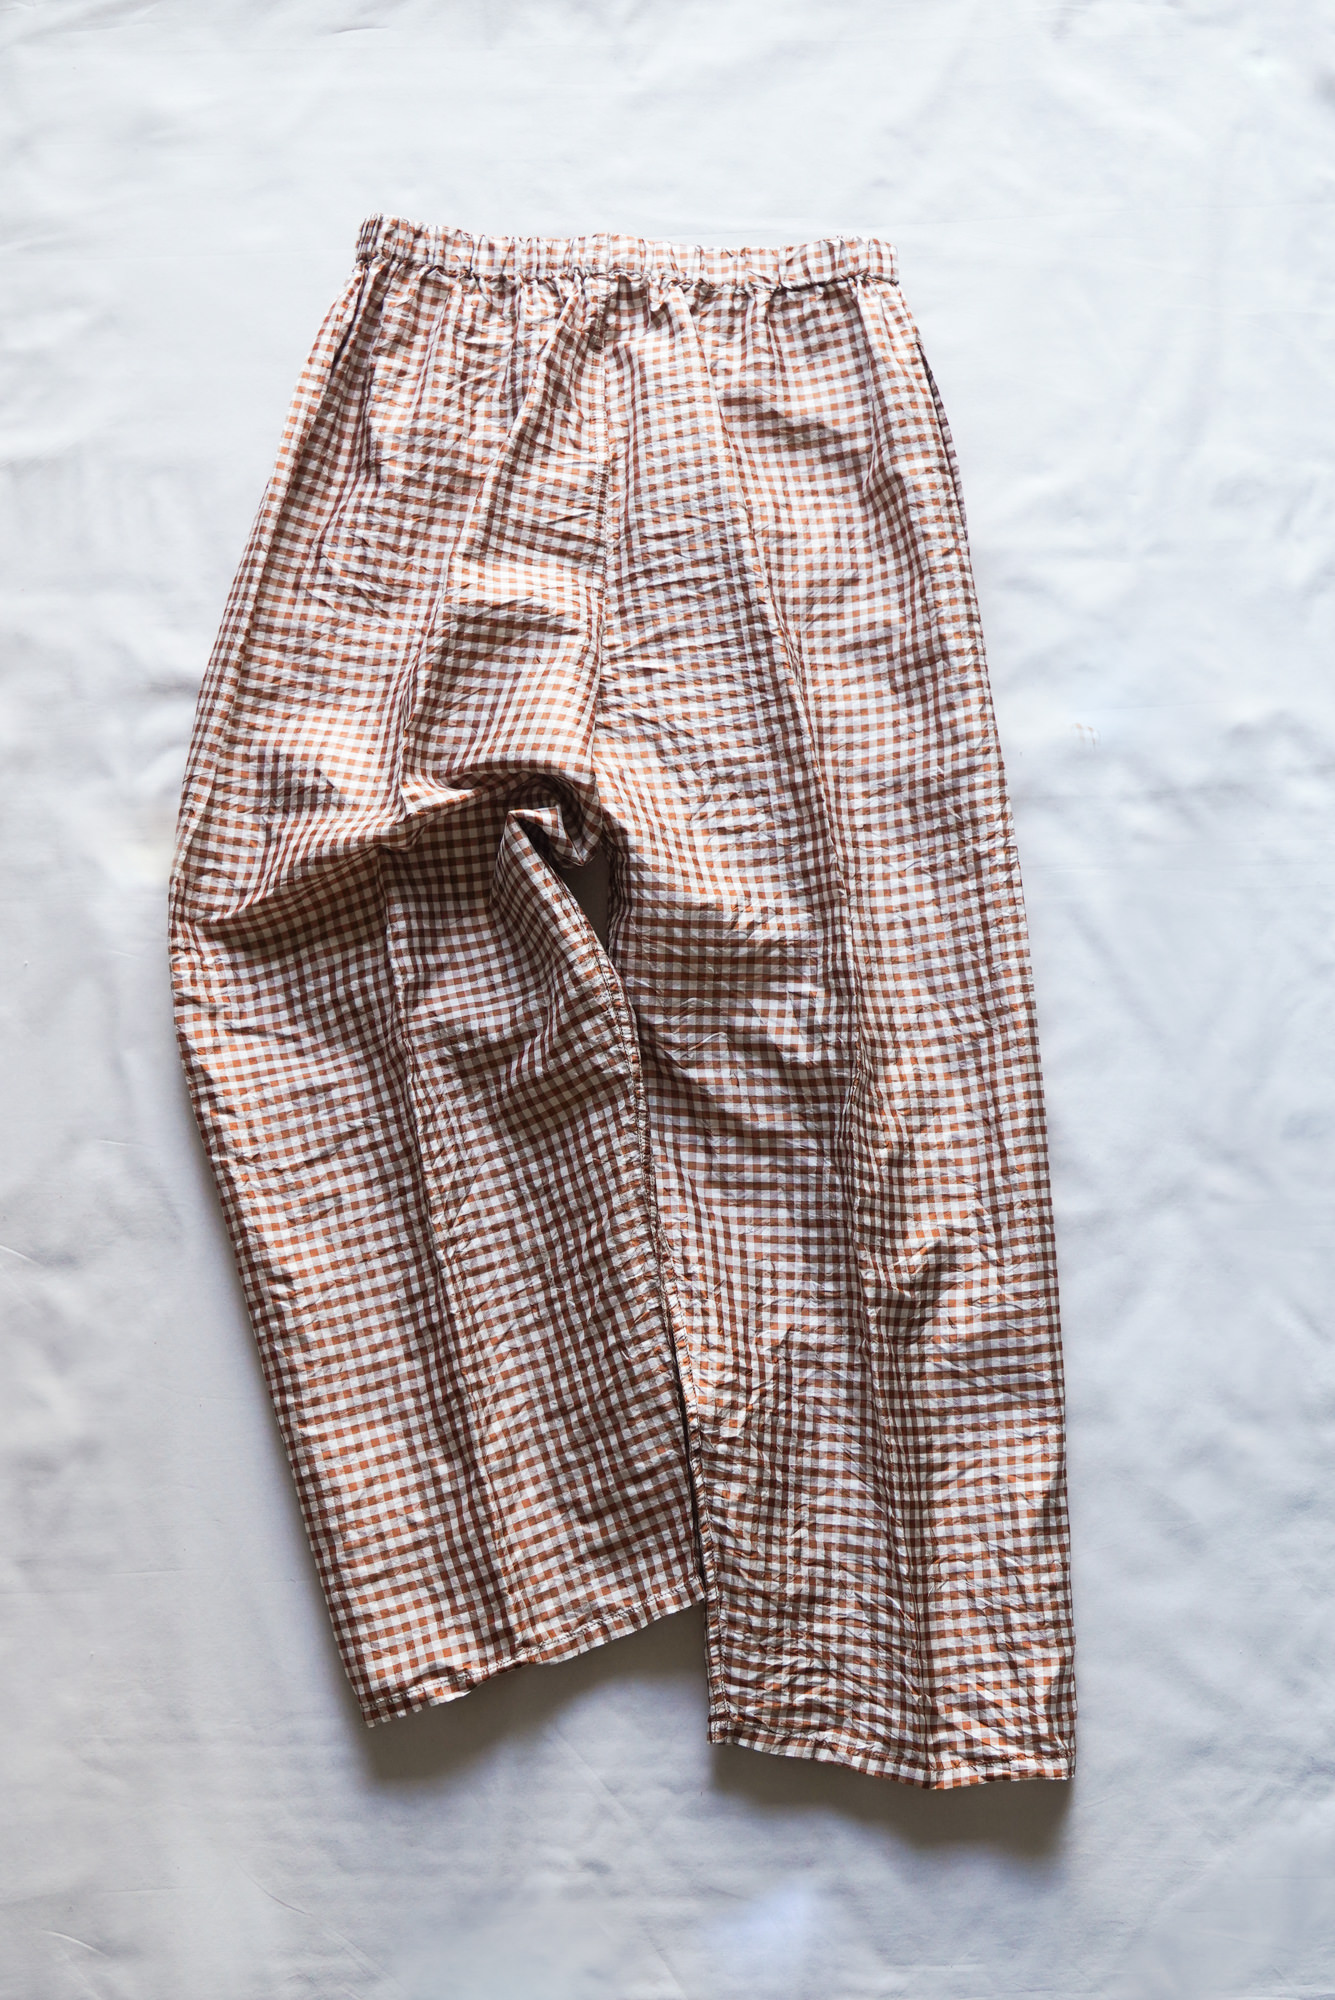 Thai Silk(Check Pattern) Meditaion Pants